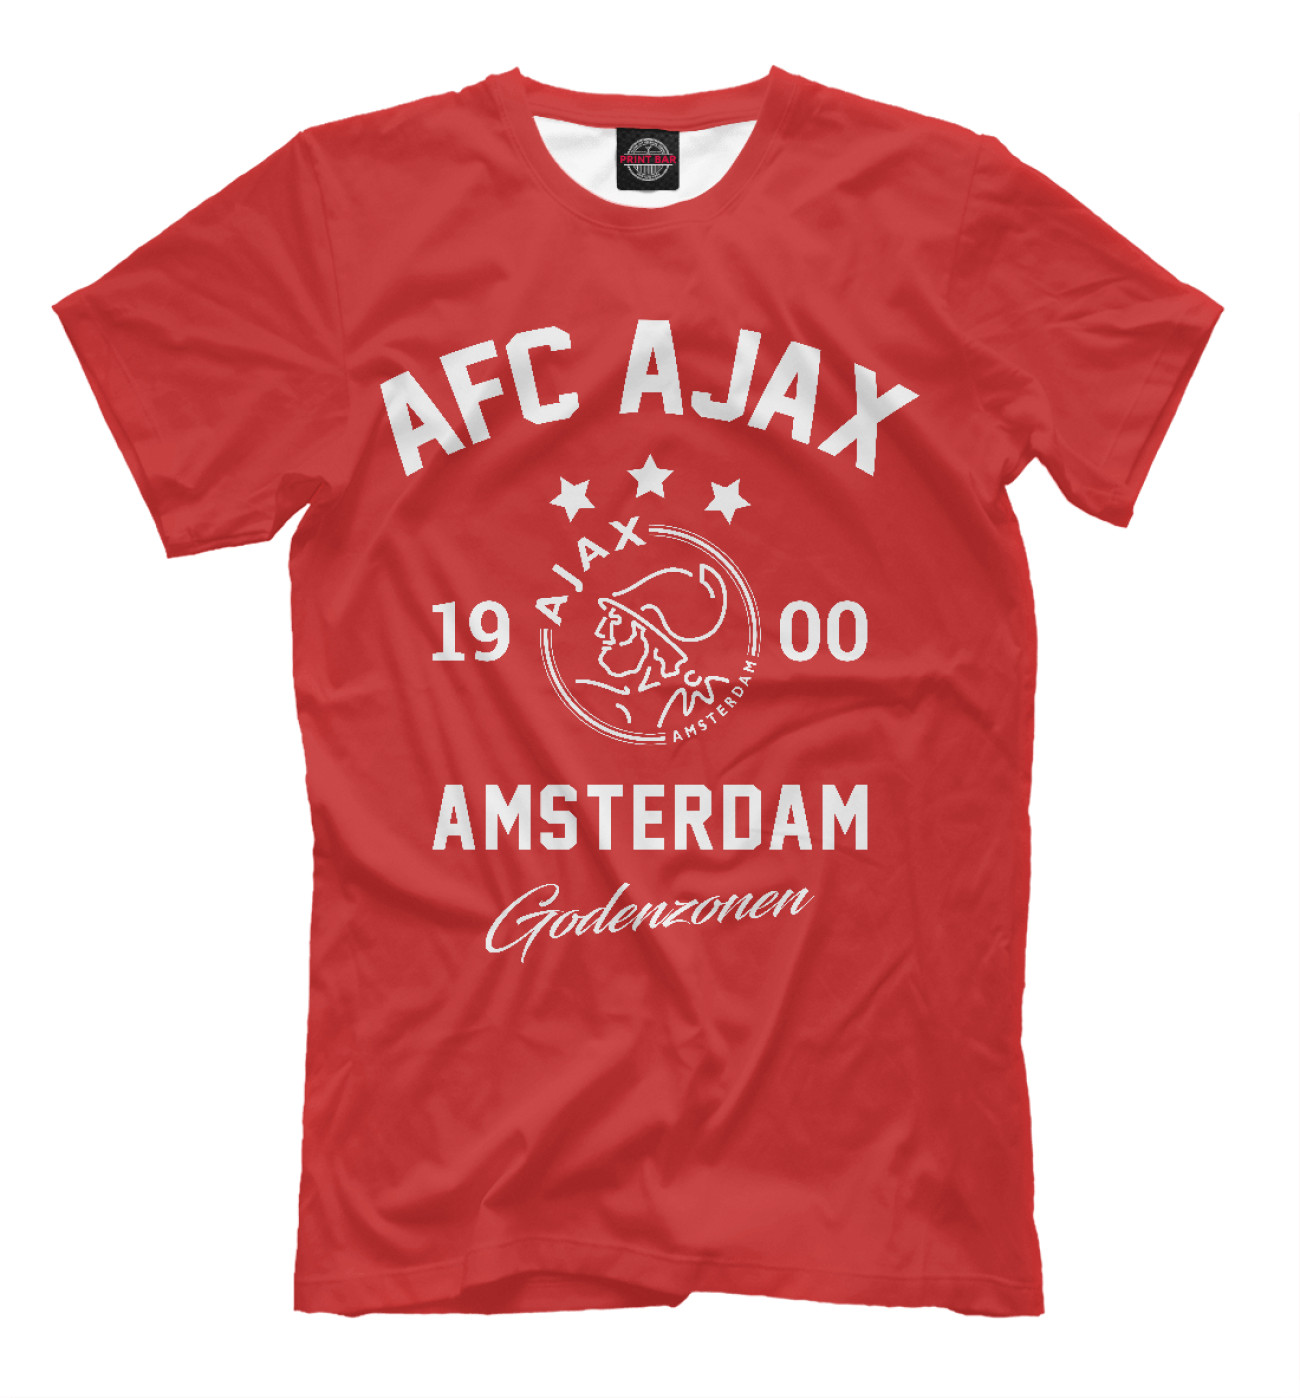 Мужская Футболка Аякс Амстердам, артикул: AJX-914322-fut-2